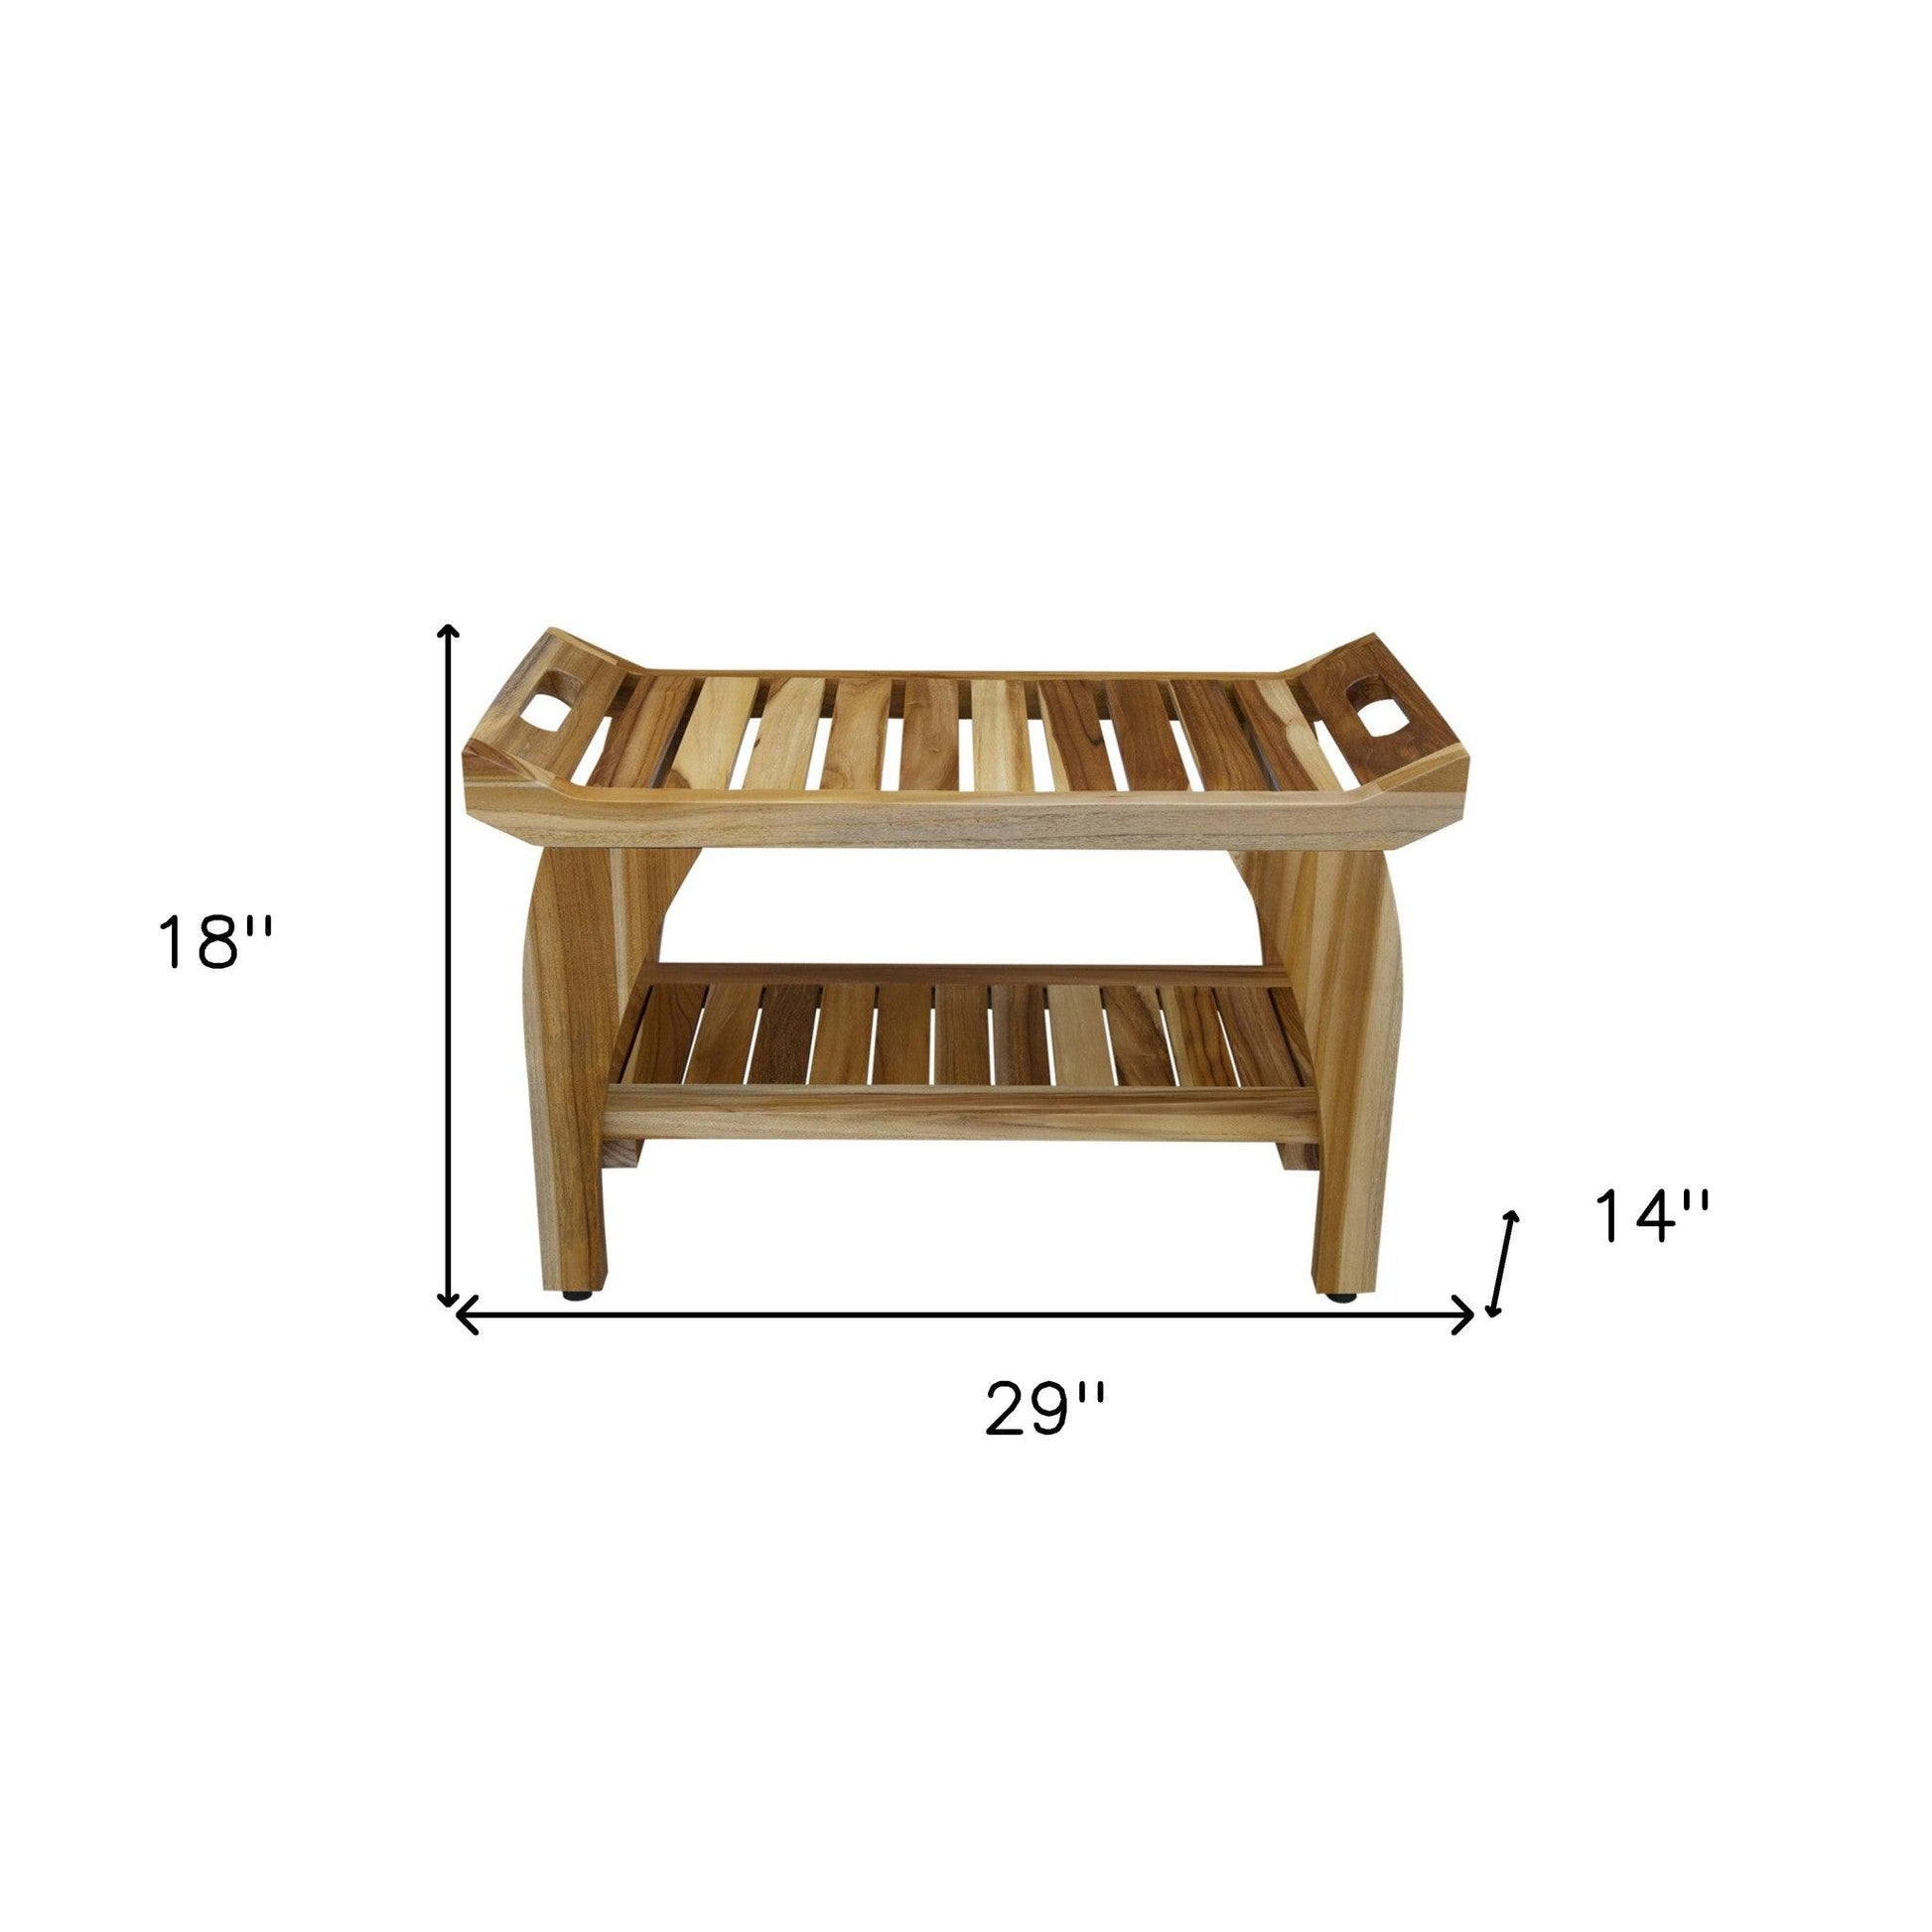 29" Teak Rectangular Shower Outdoor Bench With Handles In Natural Finish - FurniFindUSA